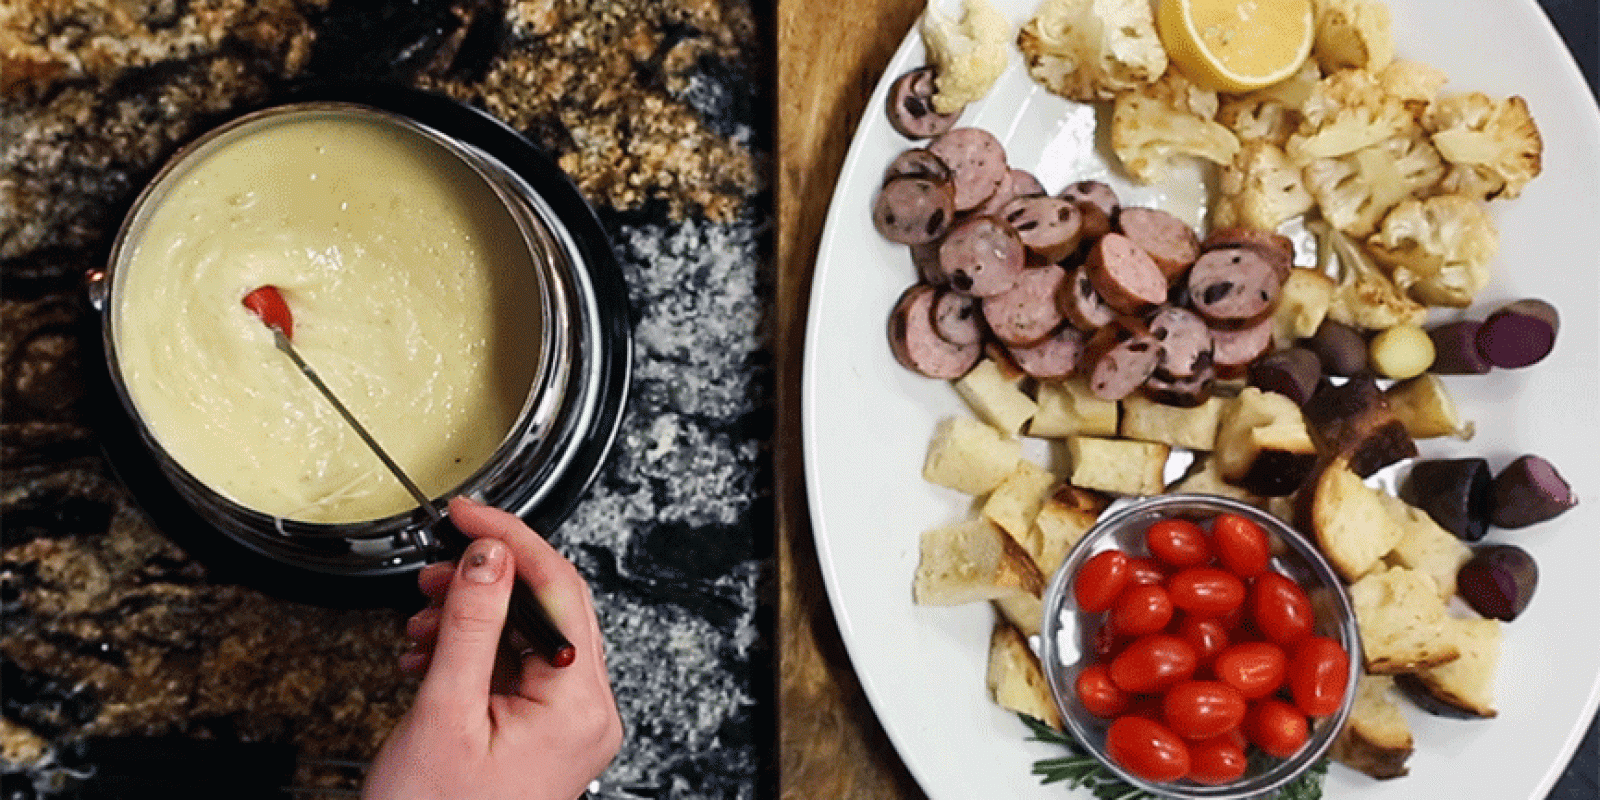 Classic cheese fondue